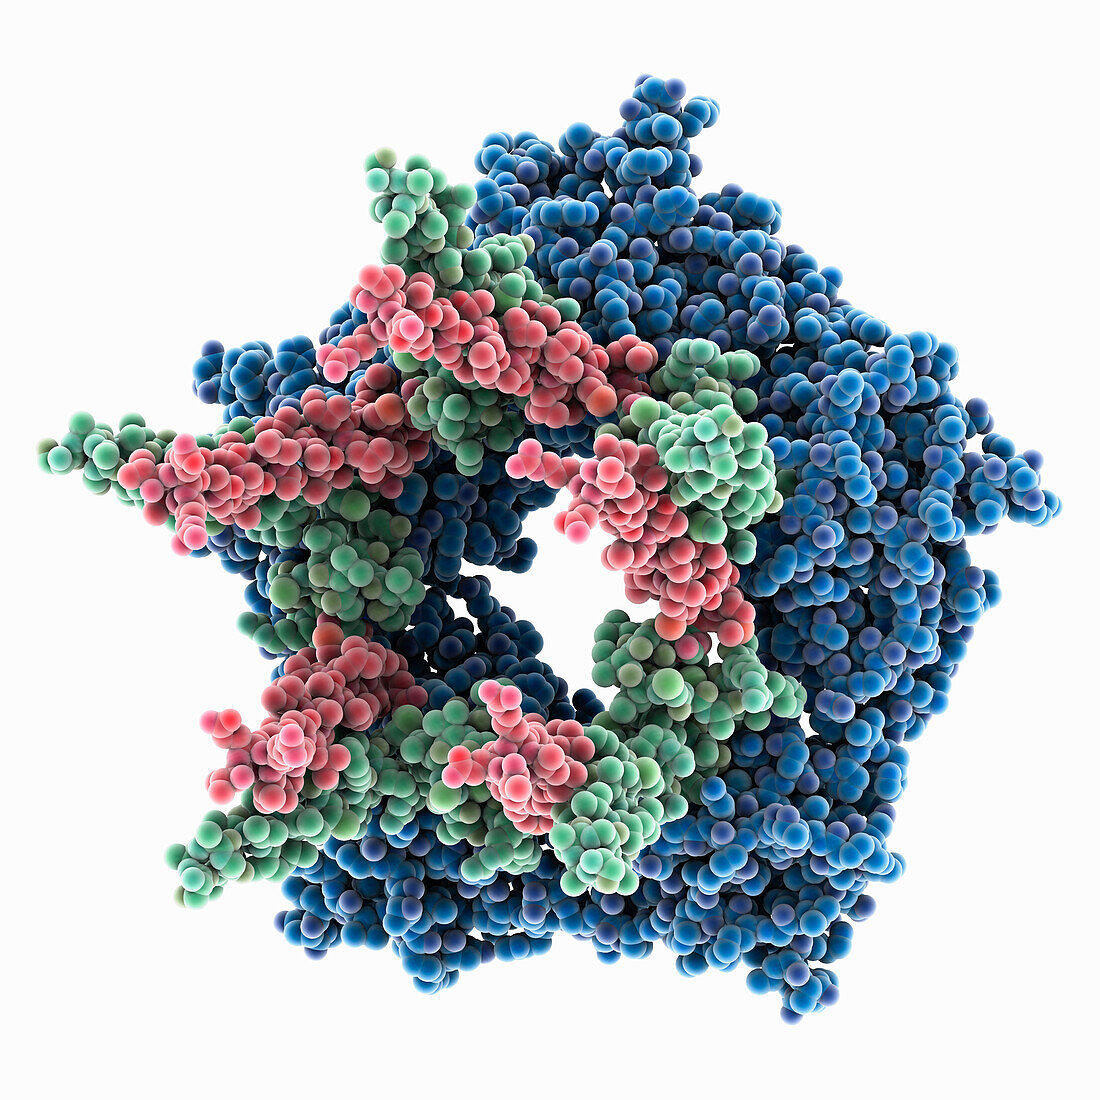 Getah virus spike glycoprotein E1, molecular model